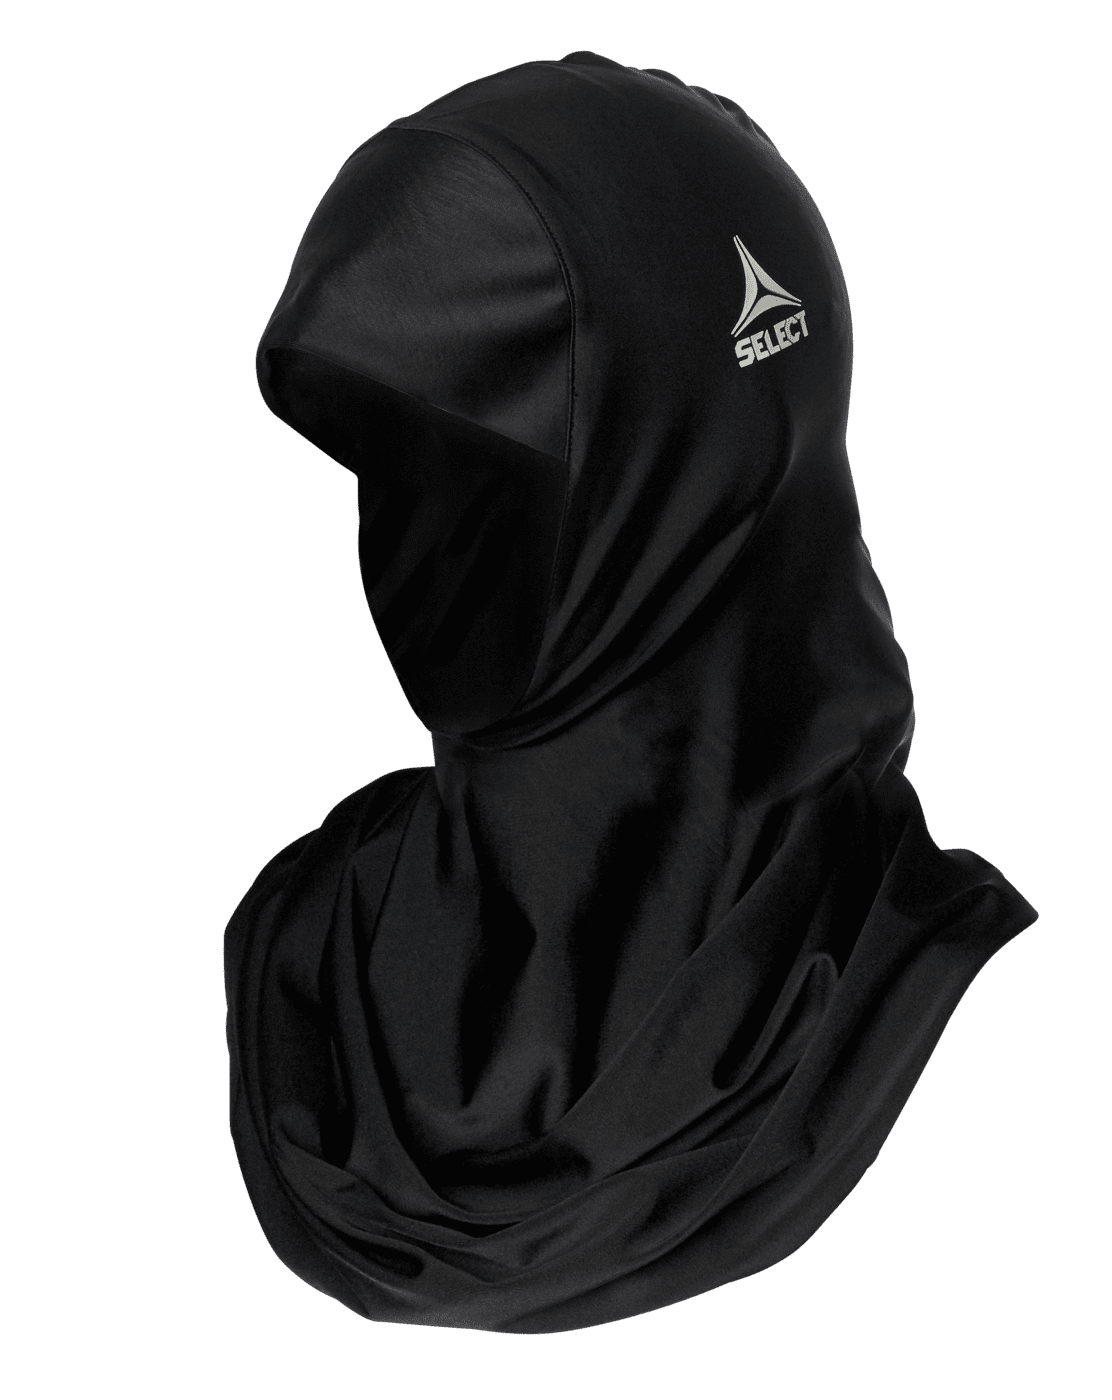 650052_black_Sports_Hijab_Select